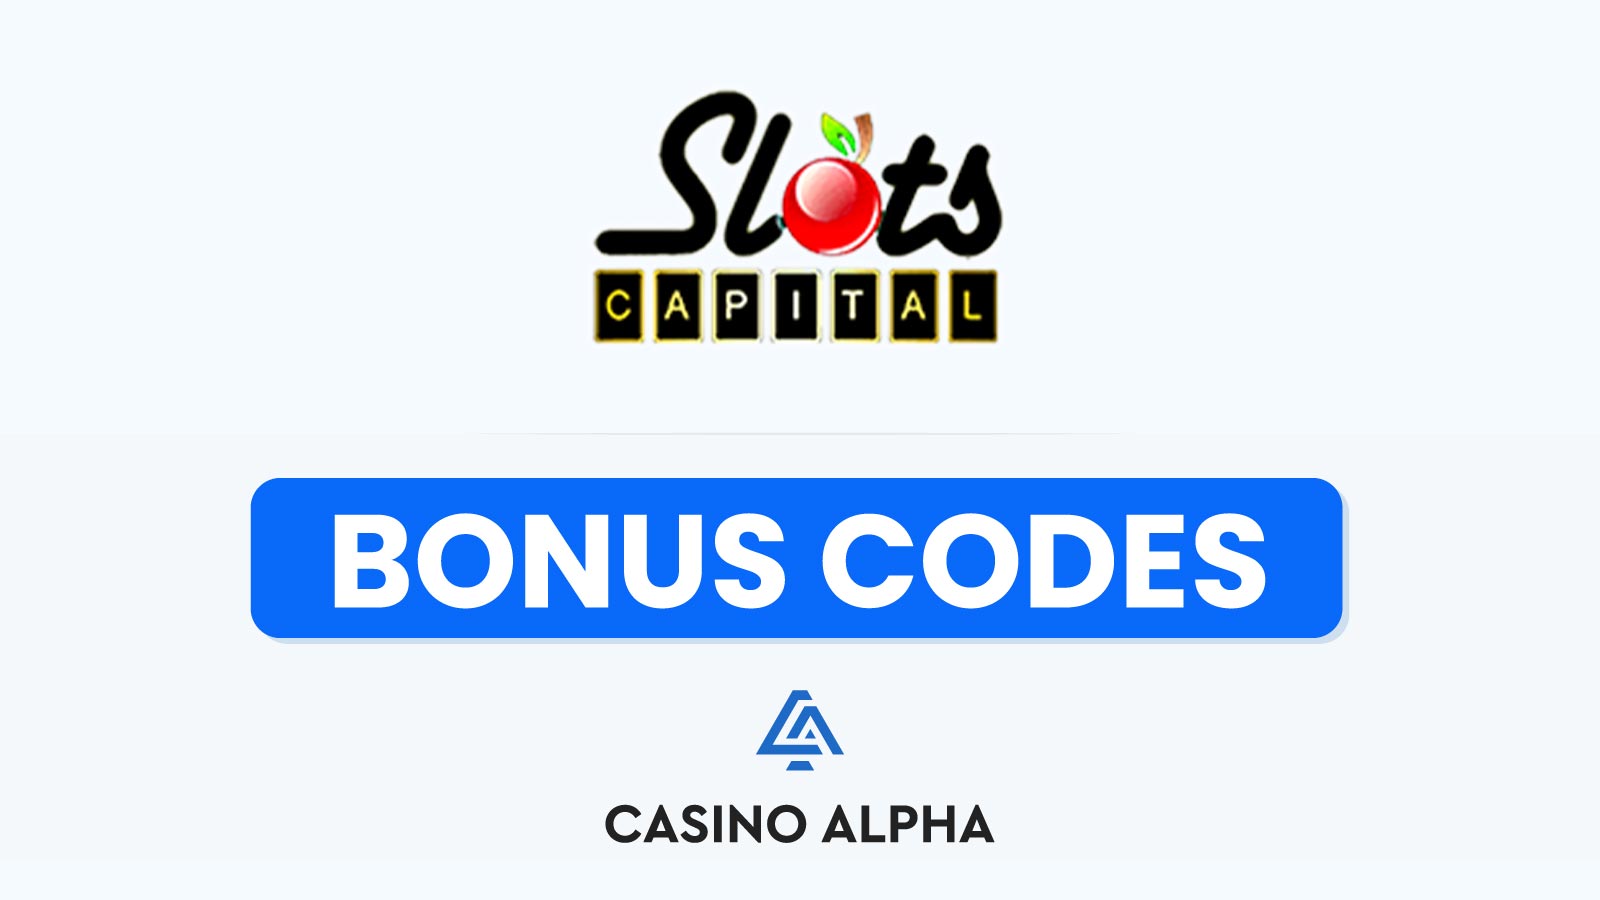 online casino no deposit bonus list